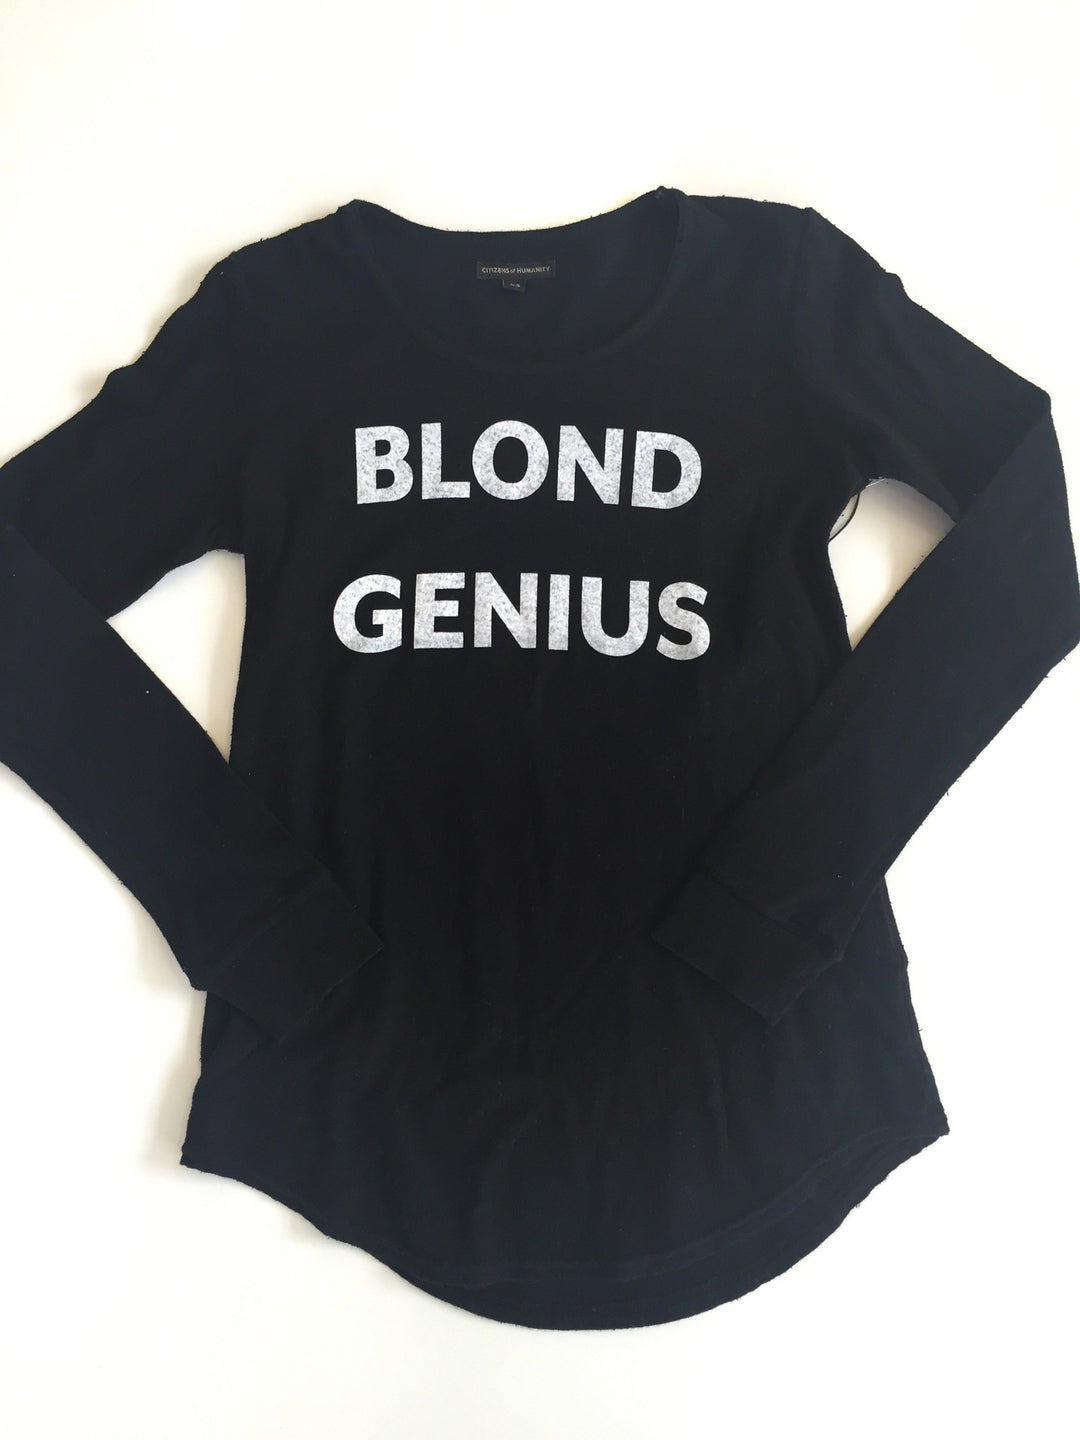 Blond Genius Blond Genius Trademark Longsleeve at Blond Genius - 1